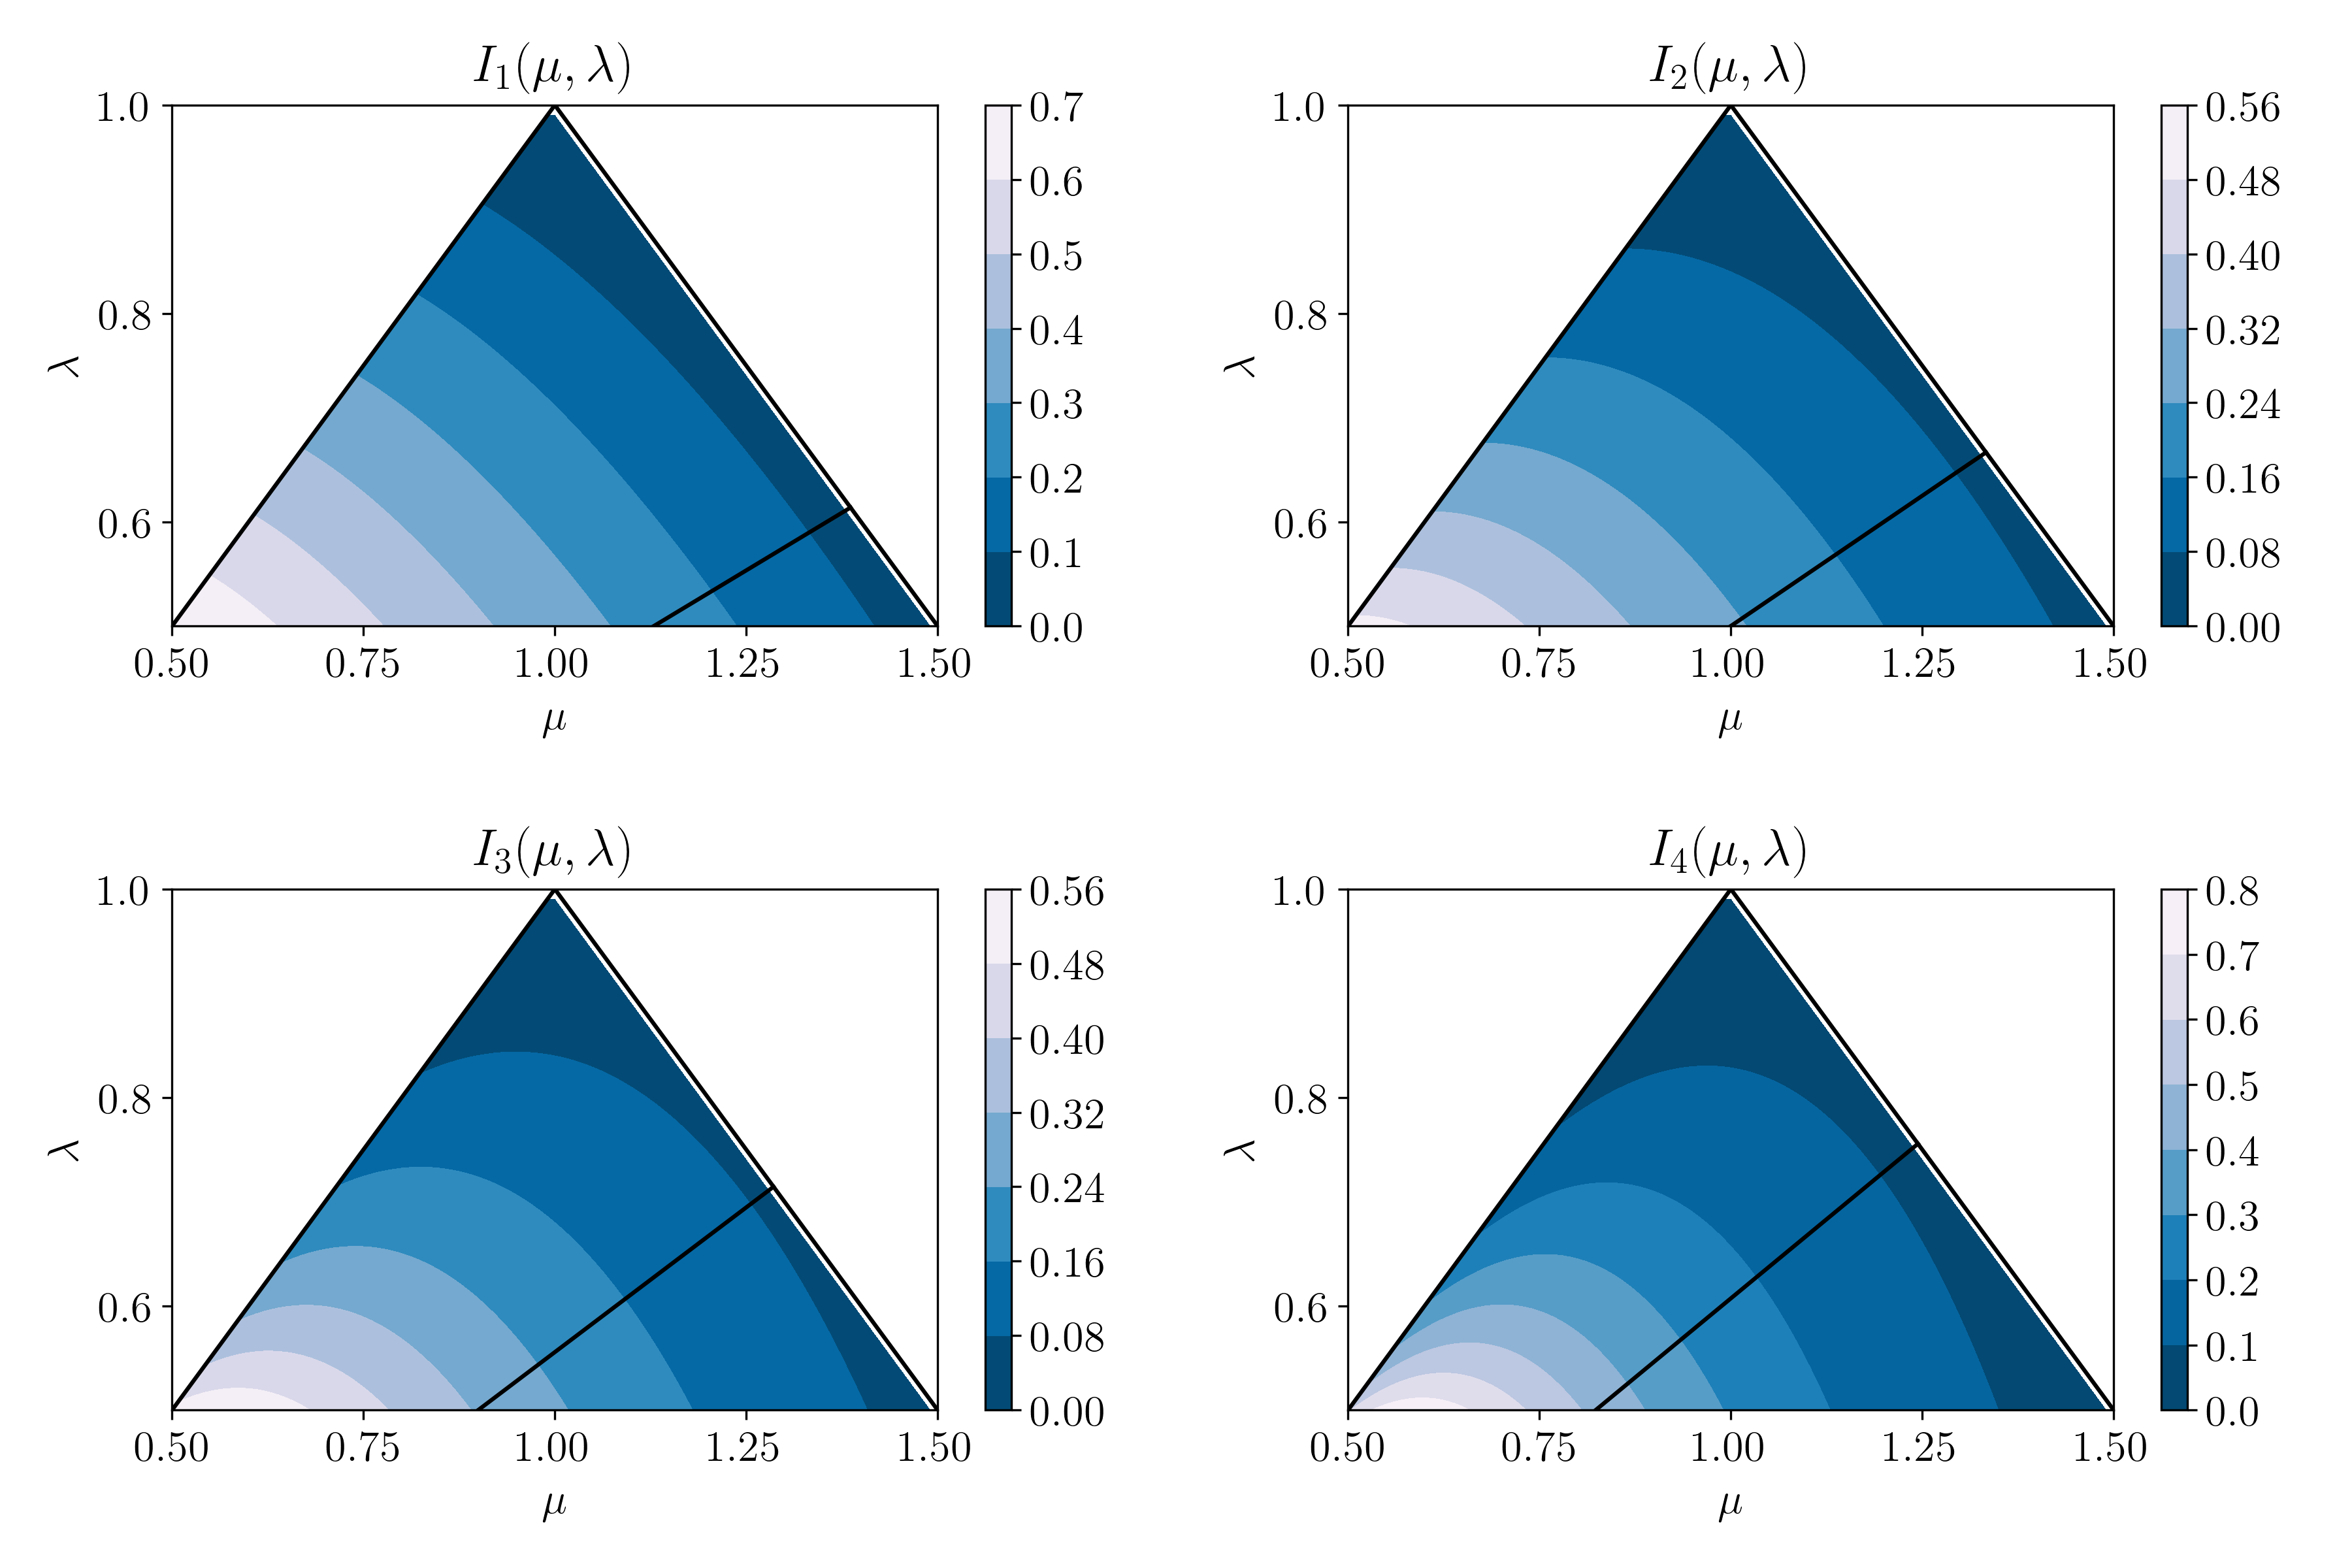 Figure 5.14: Contour plots showing I_{\alpha}(\mu, \lambda) for different values of \alpha.